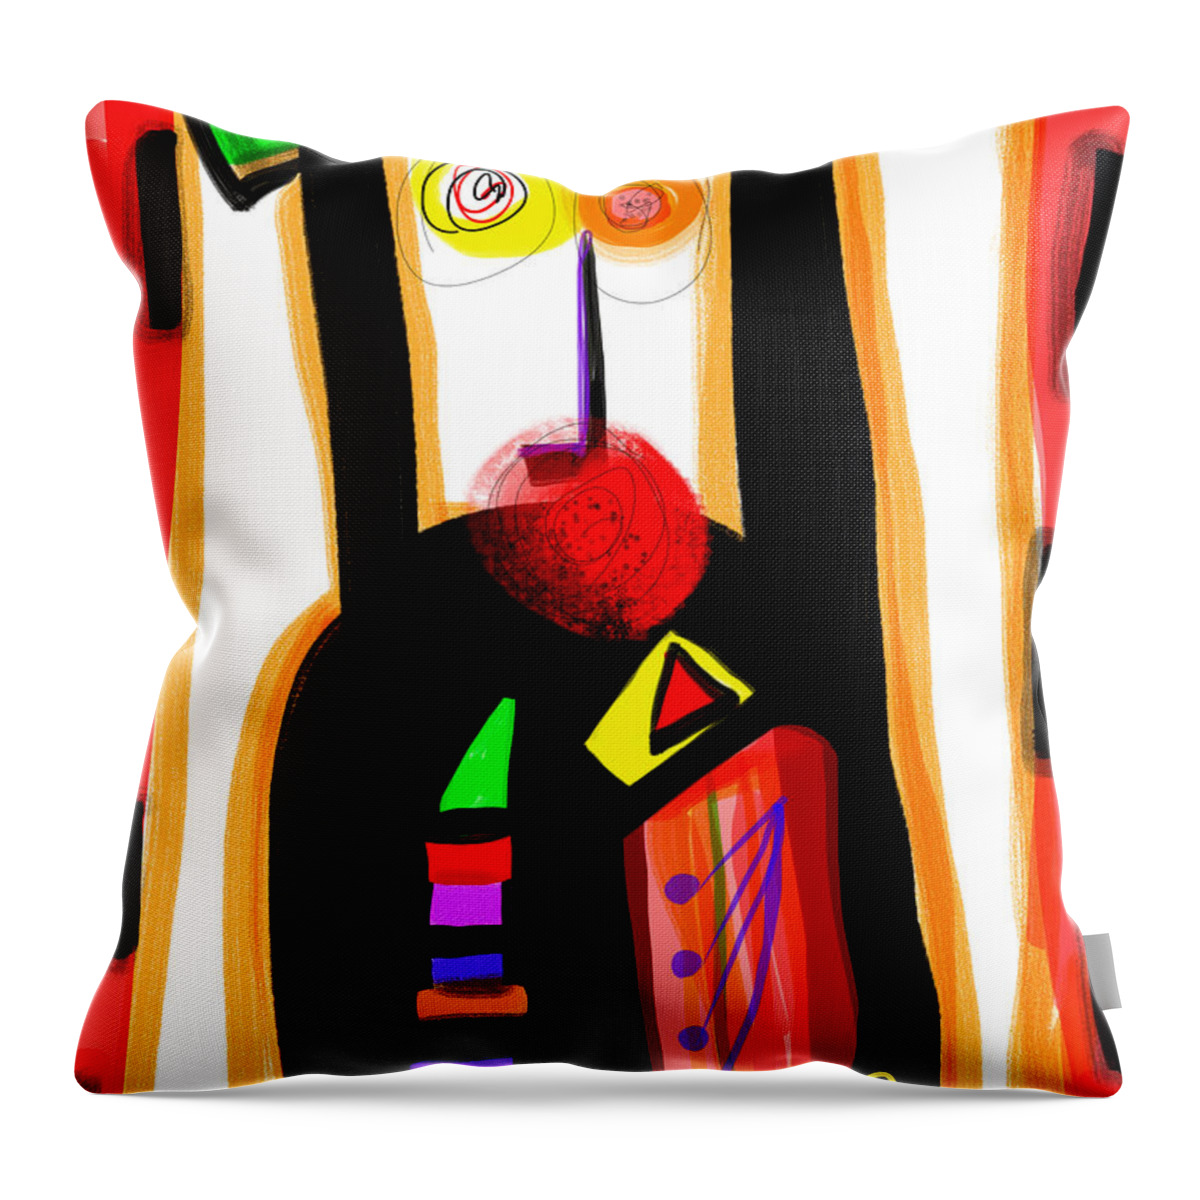 Happy Throw Pillow featuring the digital art Hooray by Susan Fielder